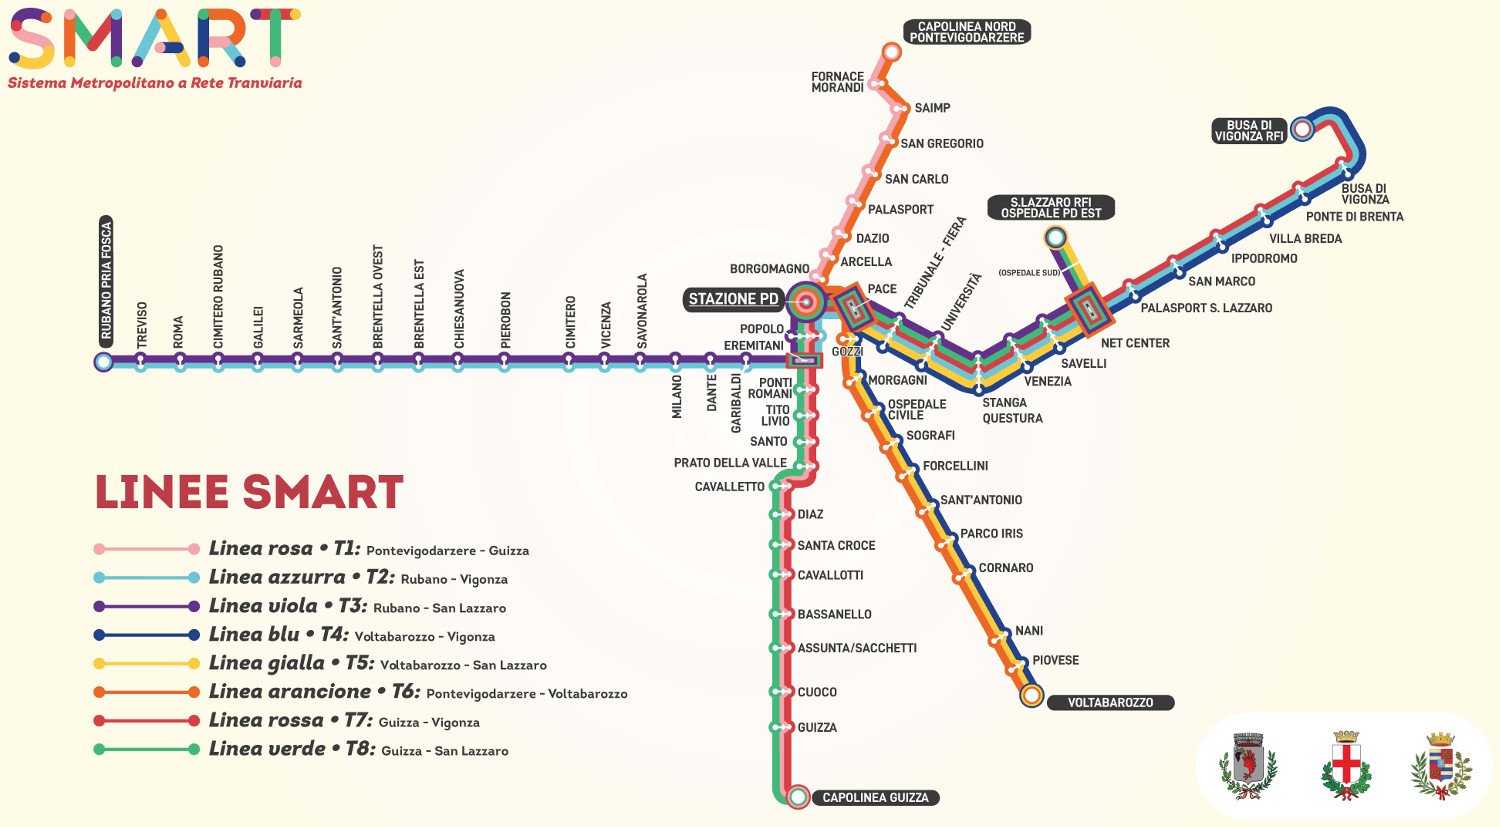 Linee Sistema Metropolitano a Rete Tranviaria - SMART